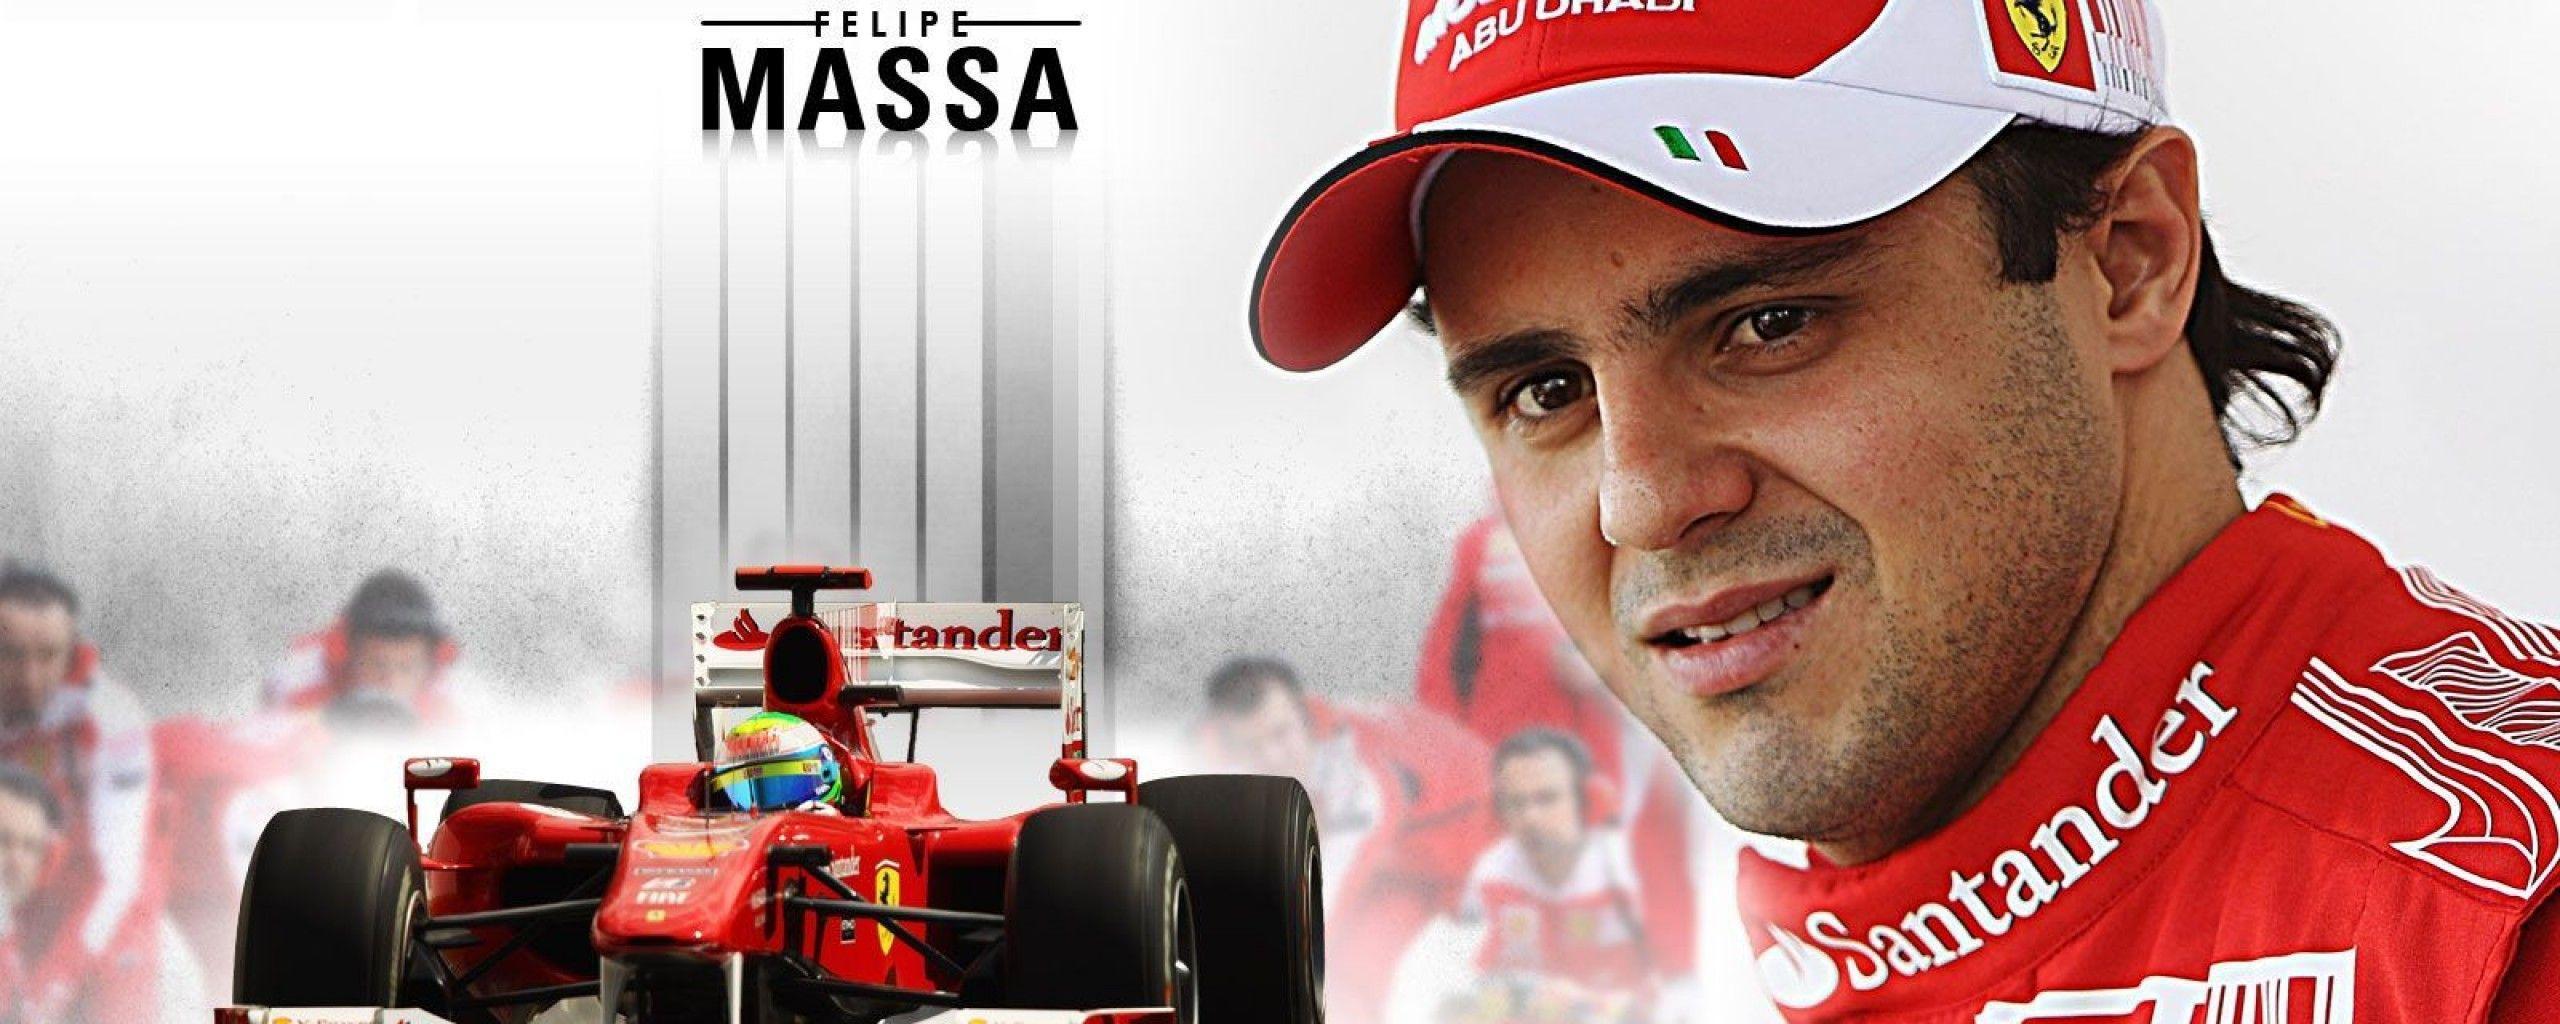 Felipe Massa HD racing wallpaper. High Quality Wallpaper